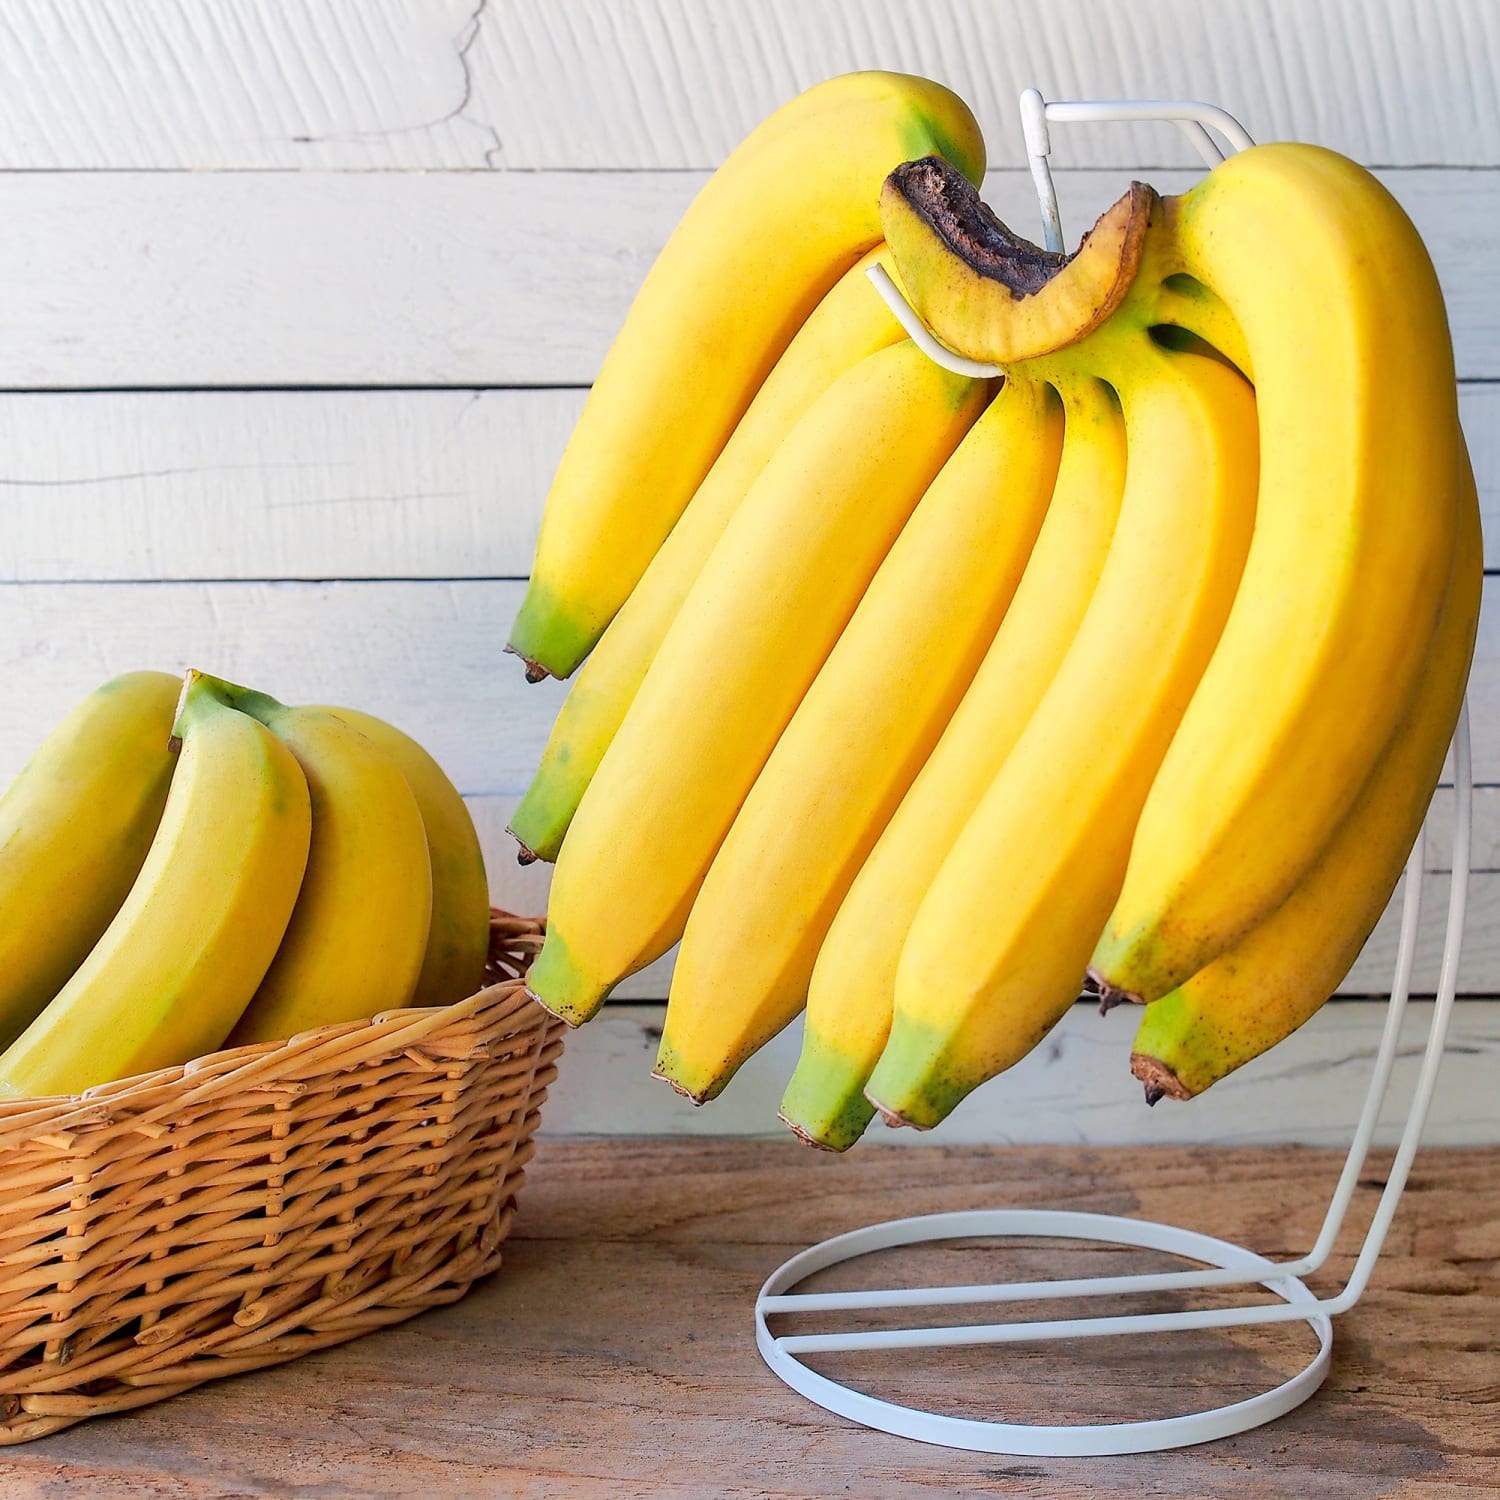 Hang the bananas using a banana hanger to prevent bruising.